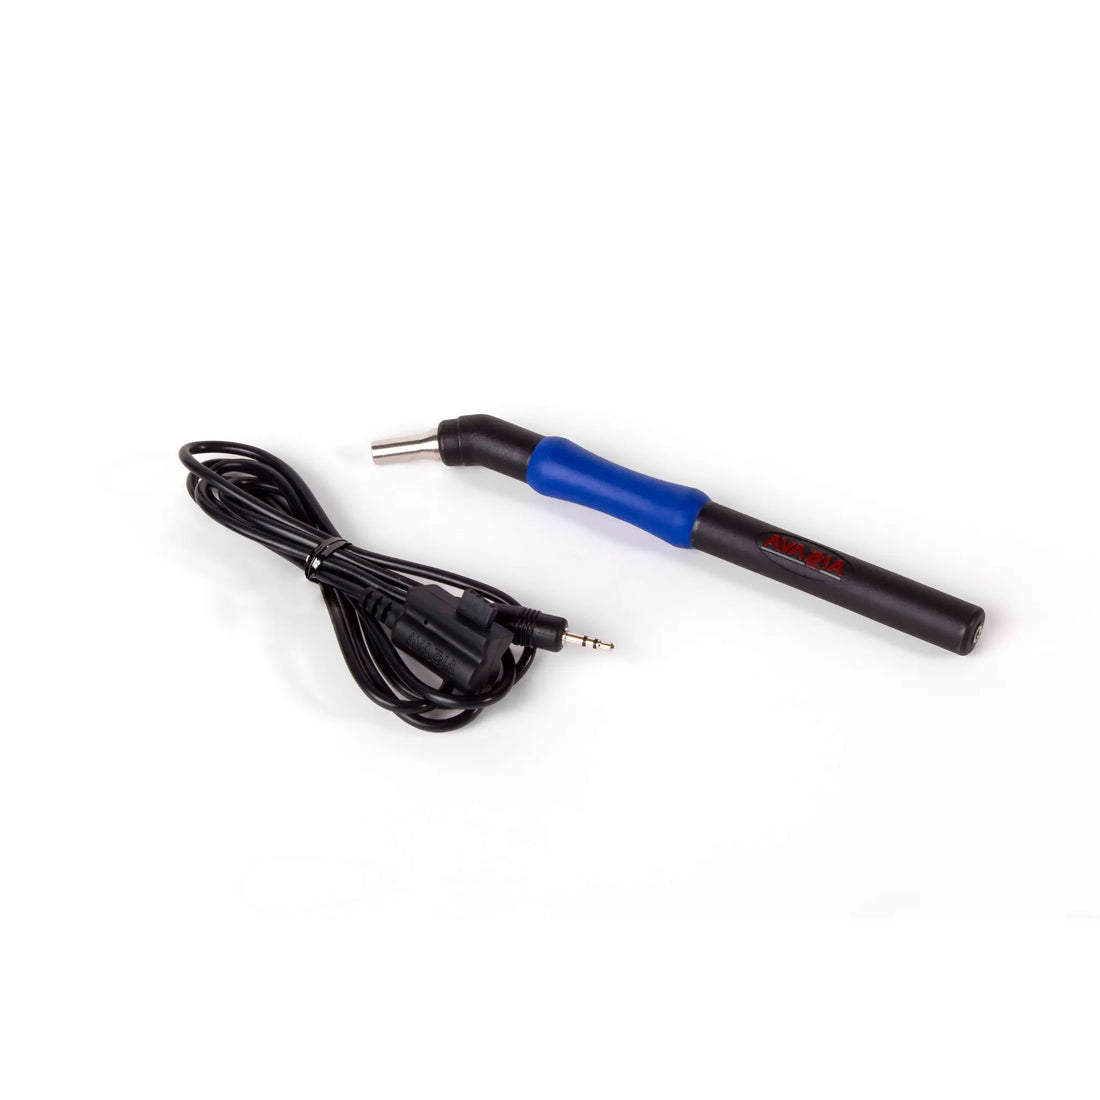 pencil type electrode 